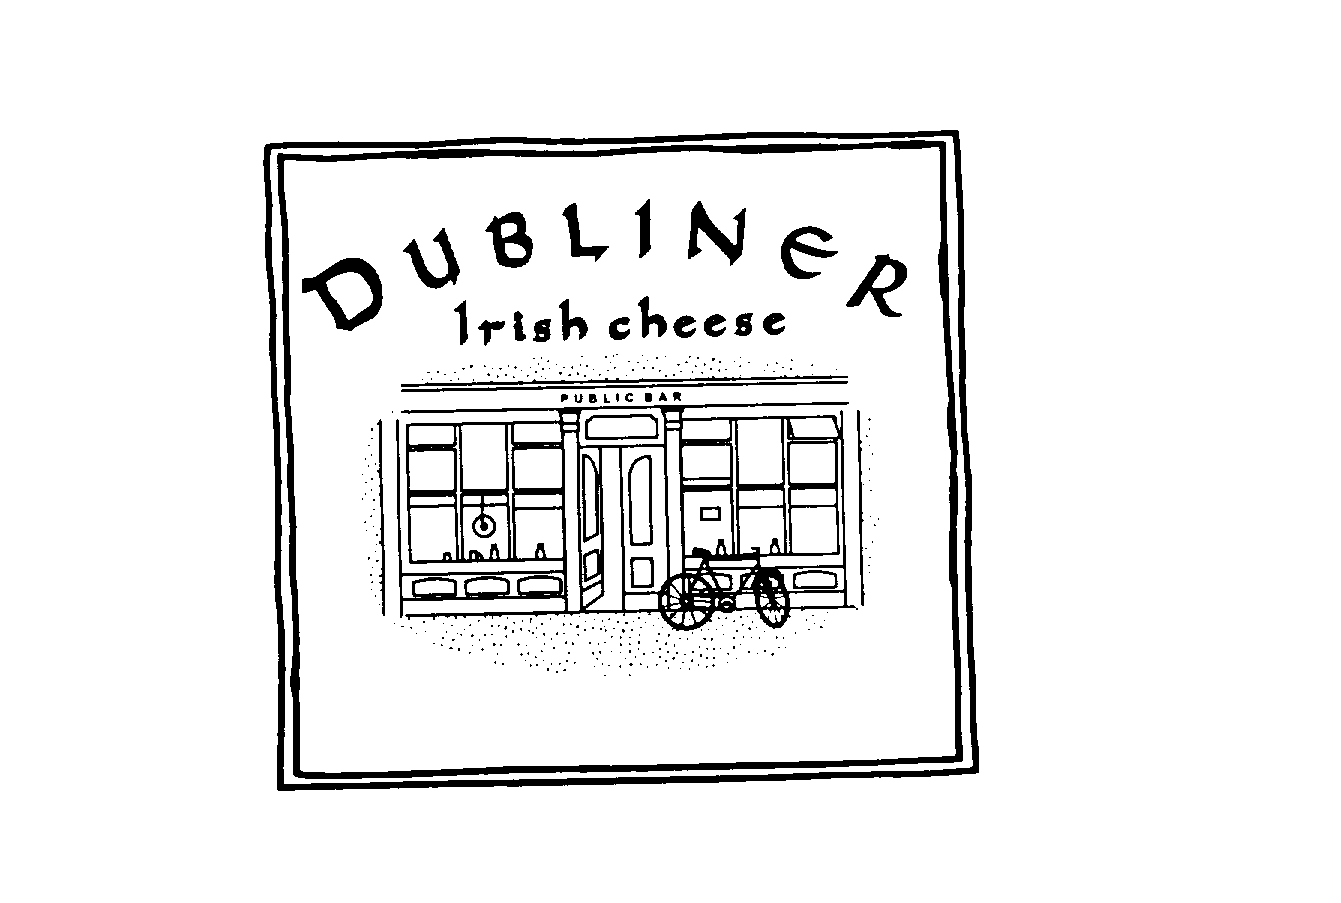  DUBLINER IRISH CHEESE PUBLIC BAR